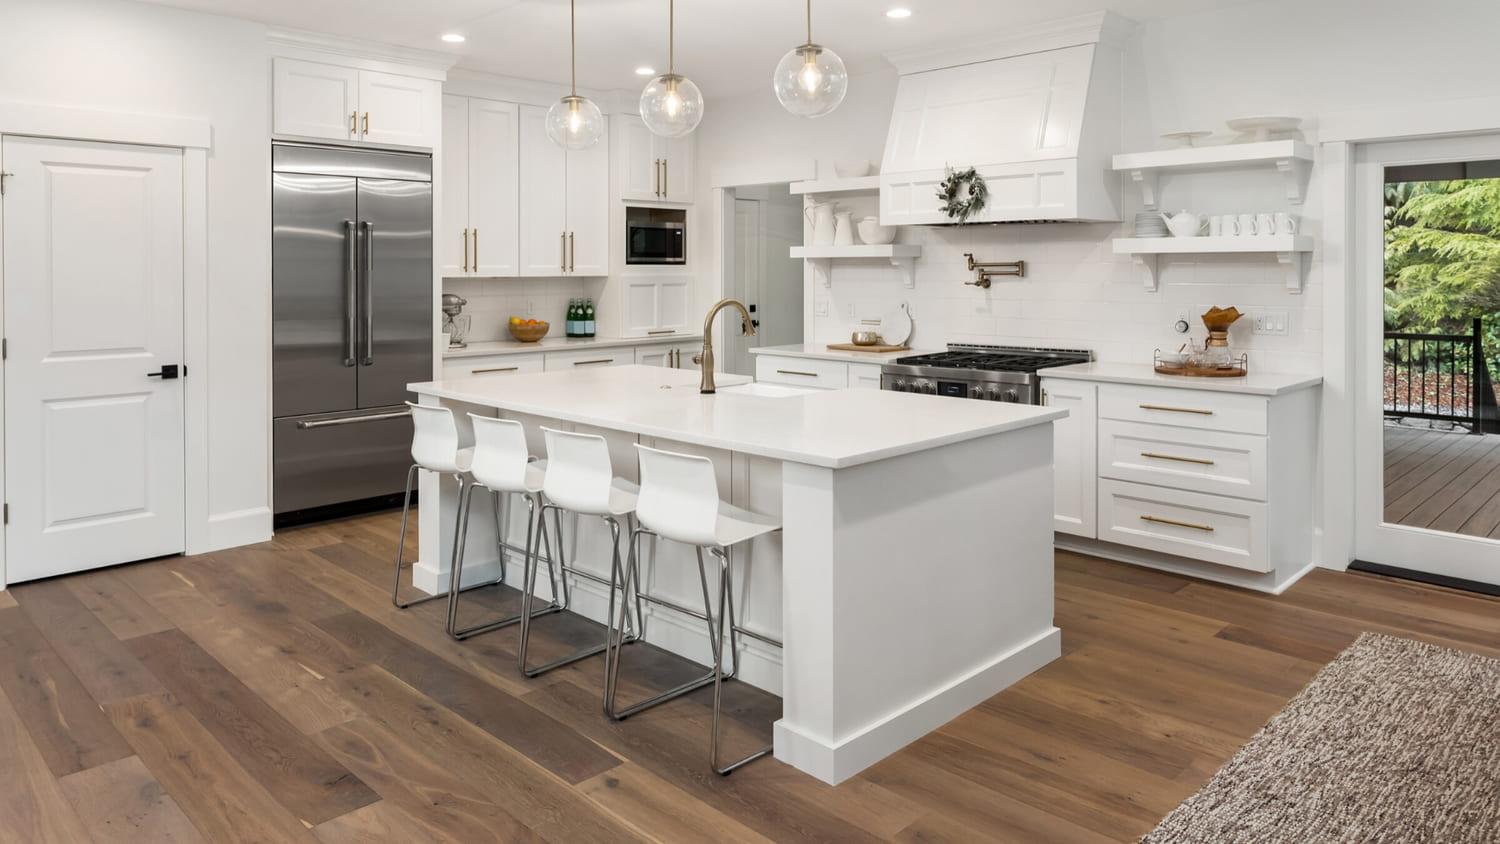 A clean white kitchen with dark wood floors